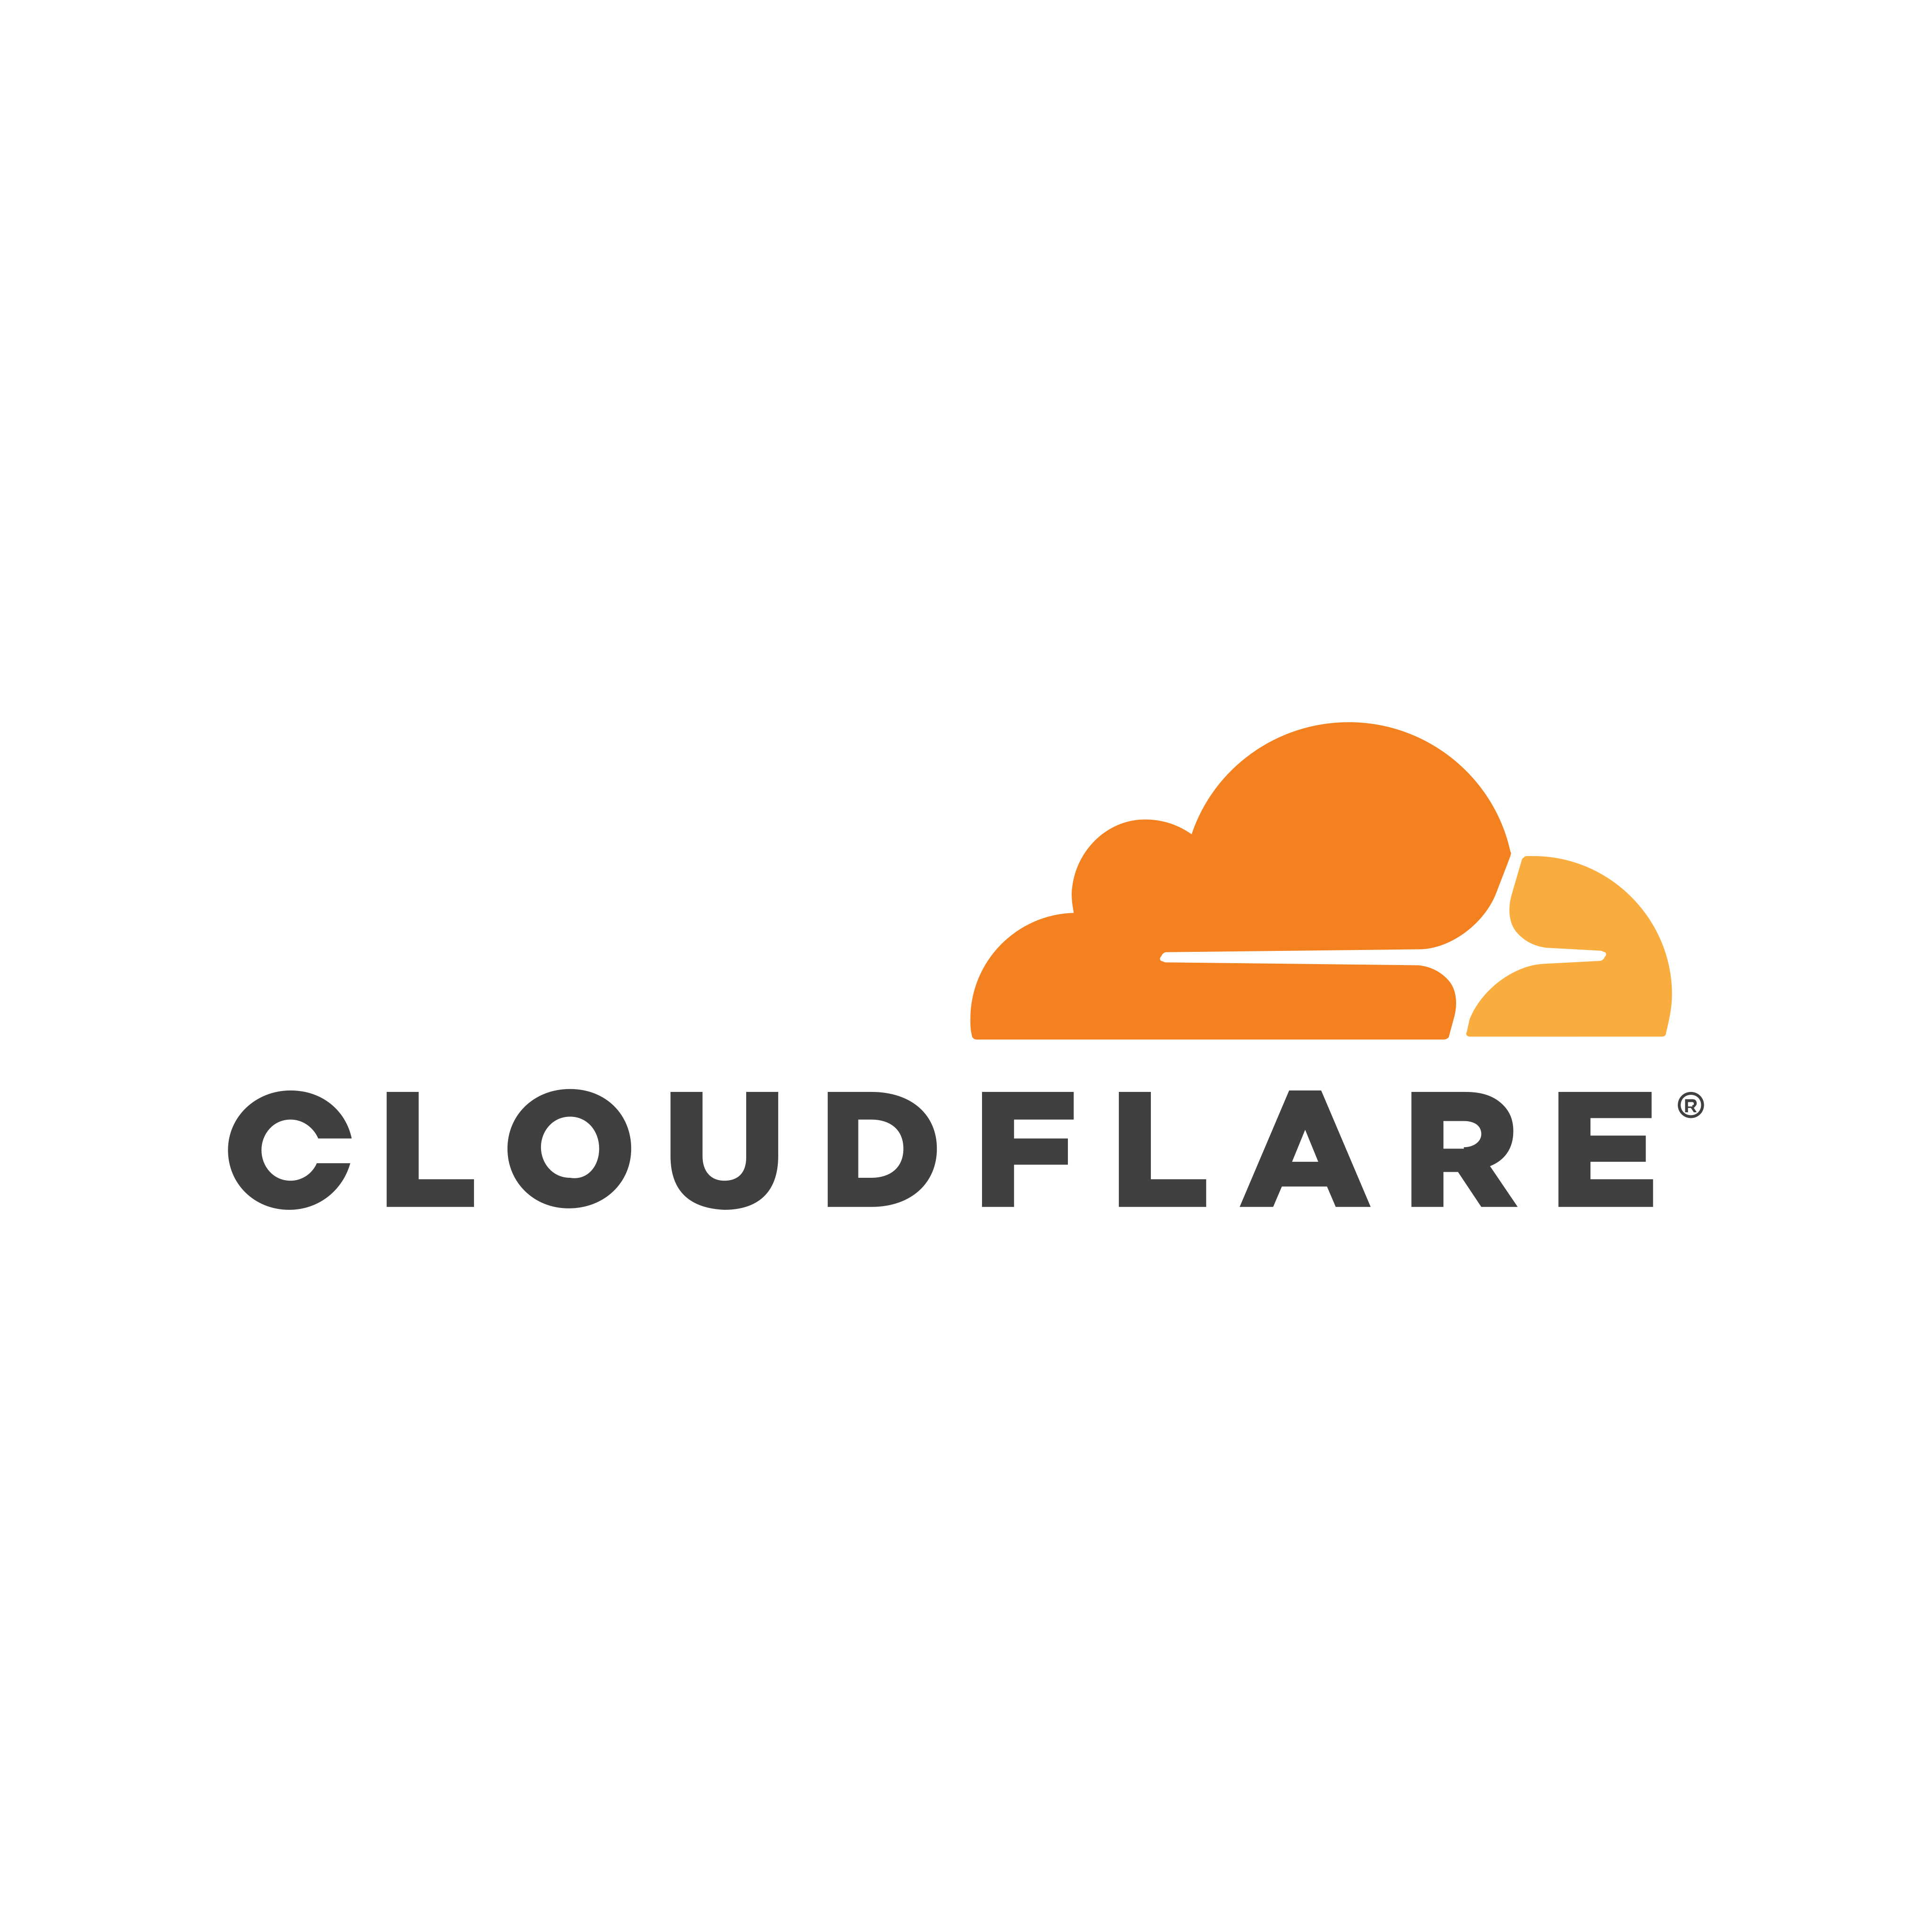 cloudflare logo 0 - Cloudflare Logo